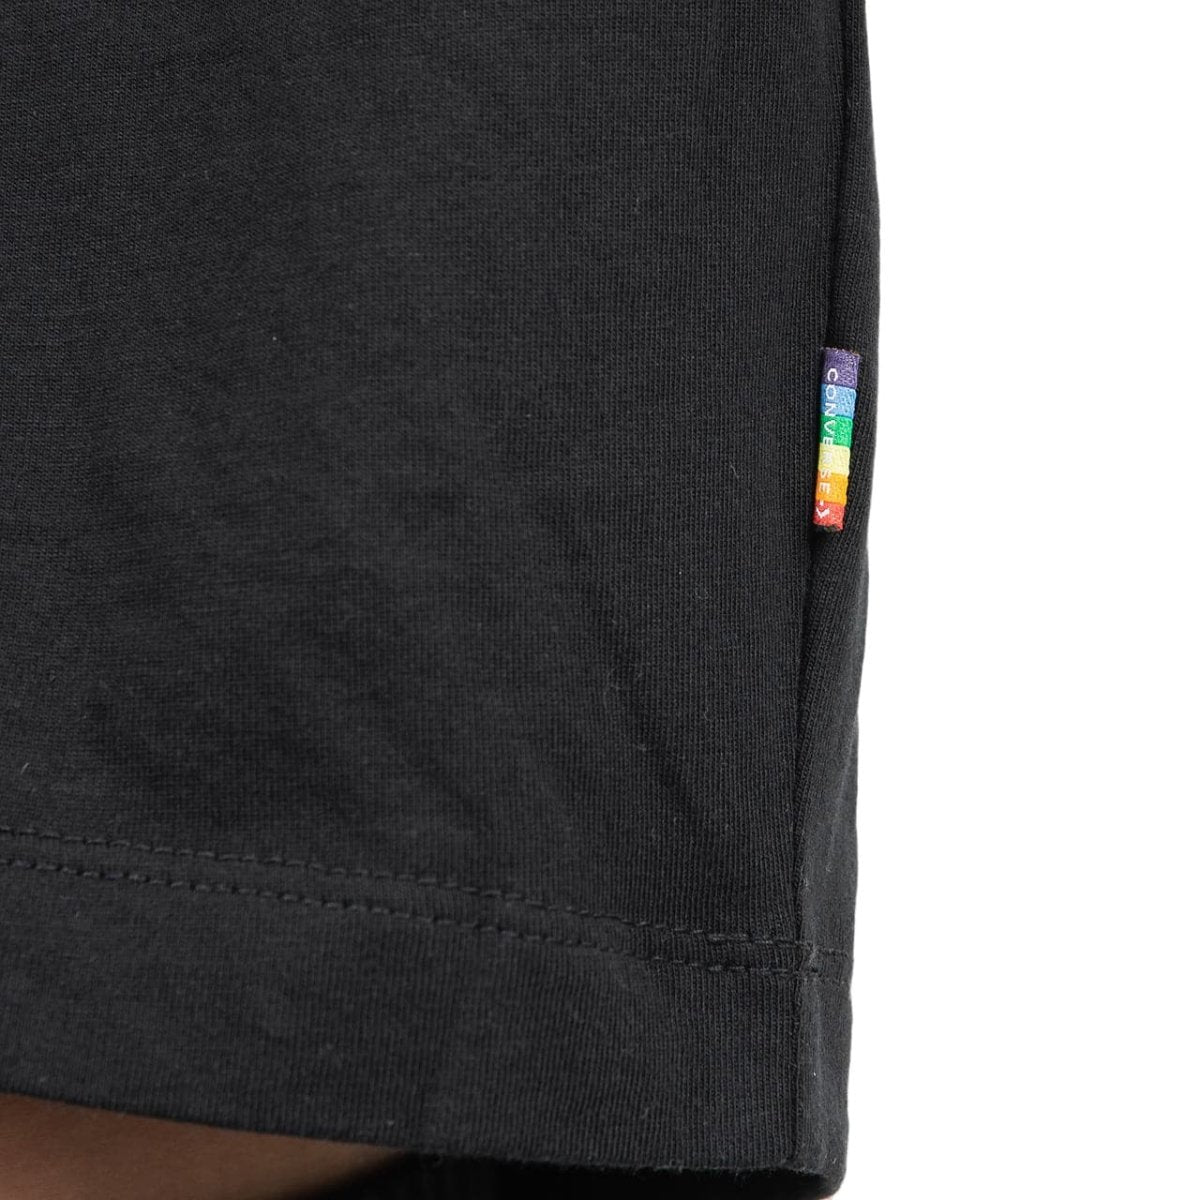 Converse Find your pride Cropped Grafik T-Shirt (Schwarz)  - Allike Store